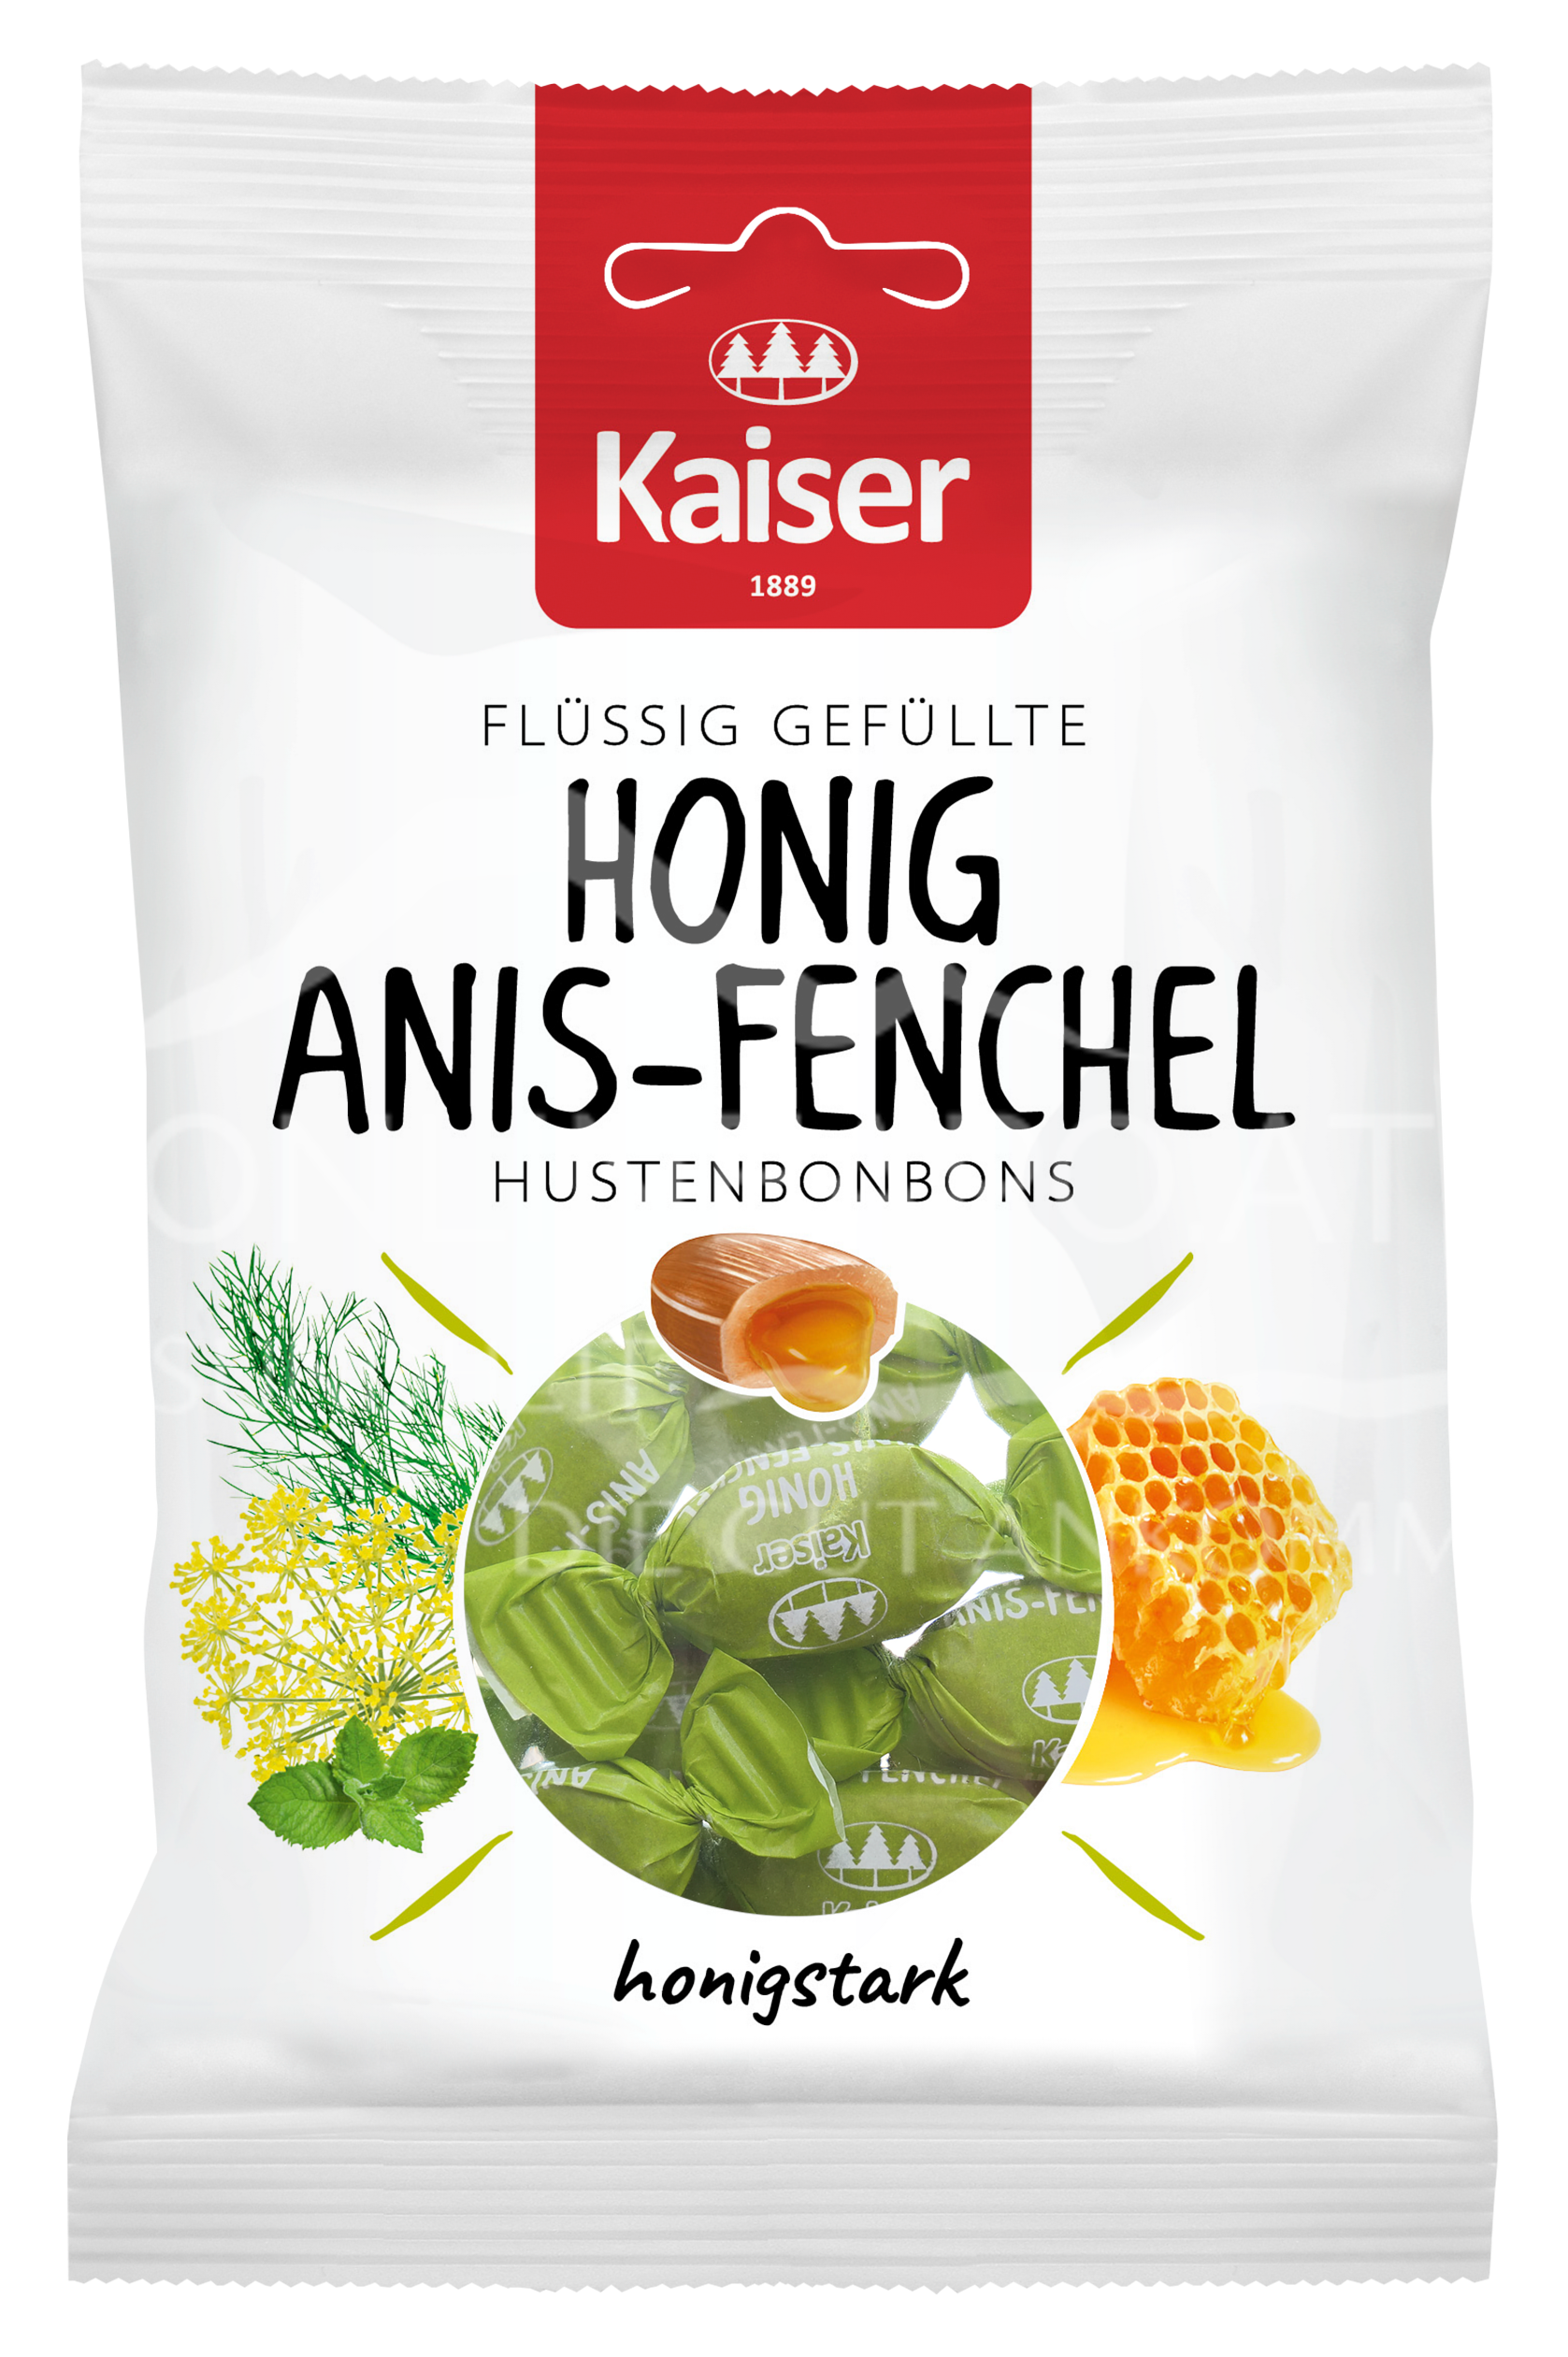 Kaiser Honig Anis-Fenchel Hustenbonbons flüssig gefüllt mit Honig